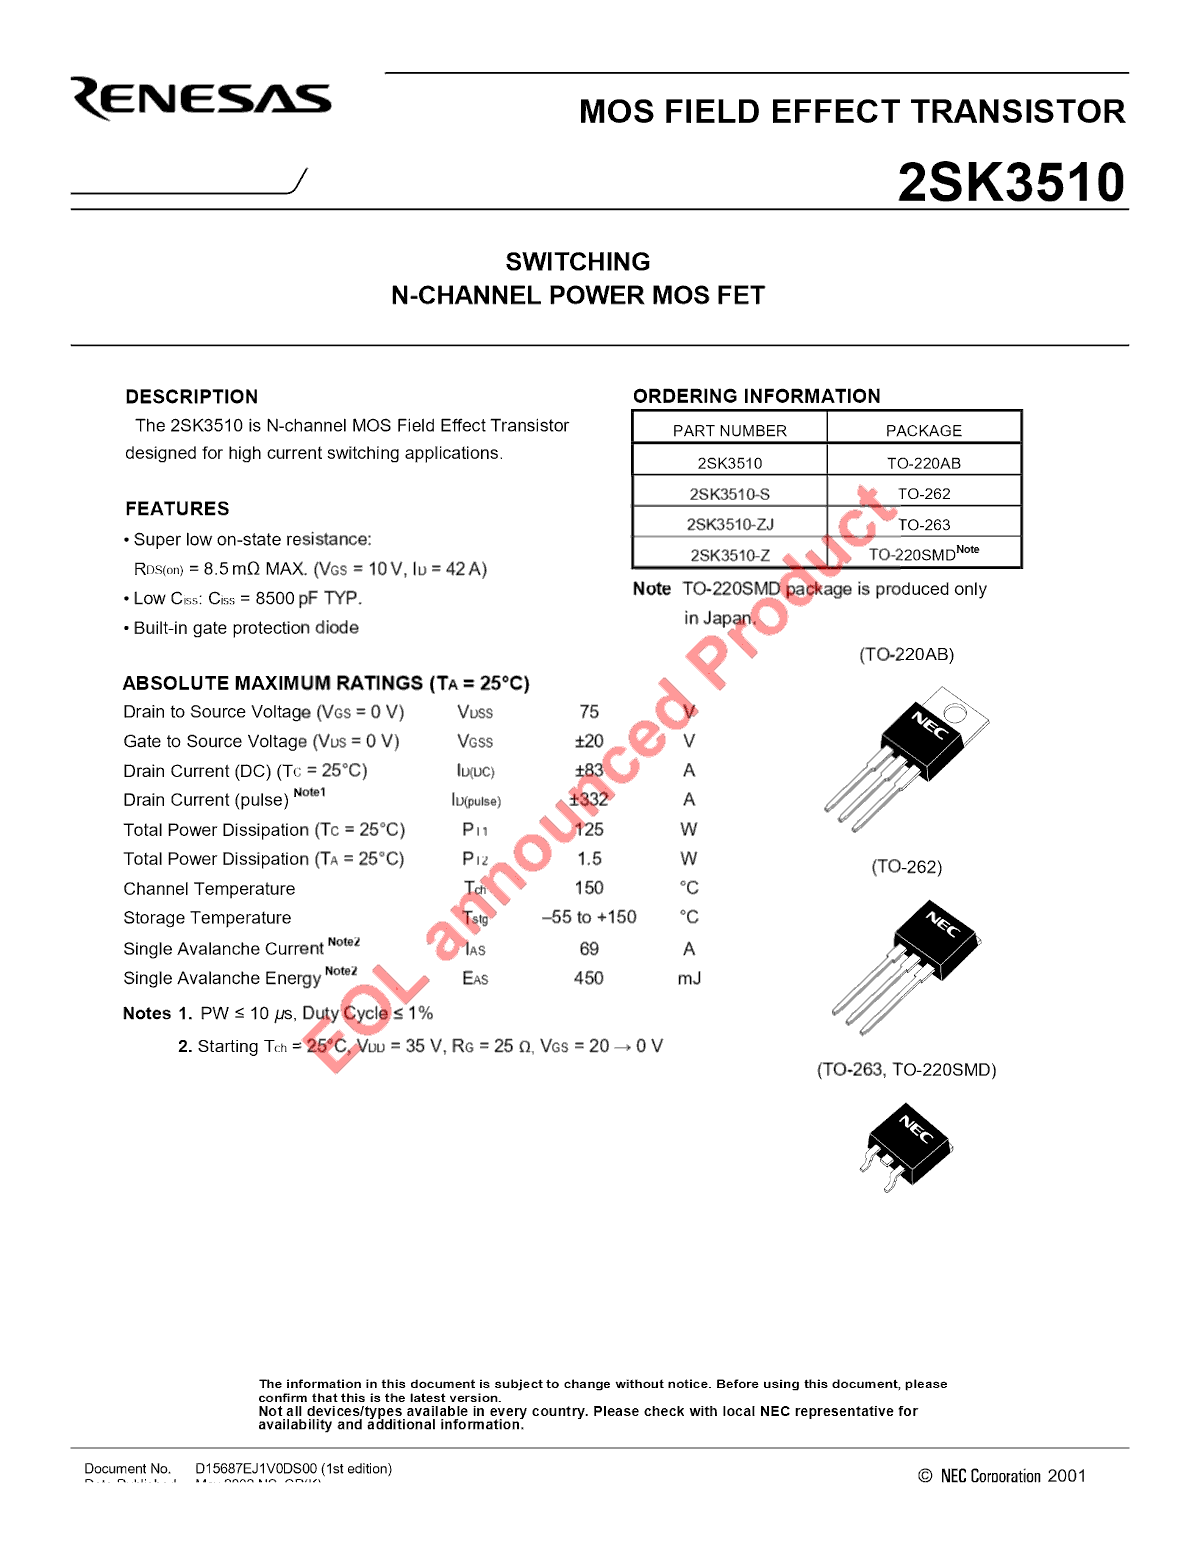 2SK3510-datasheets